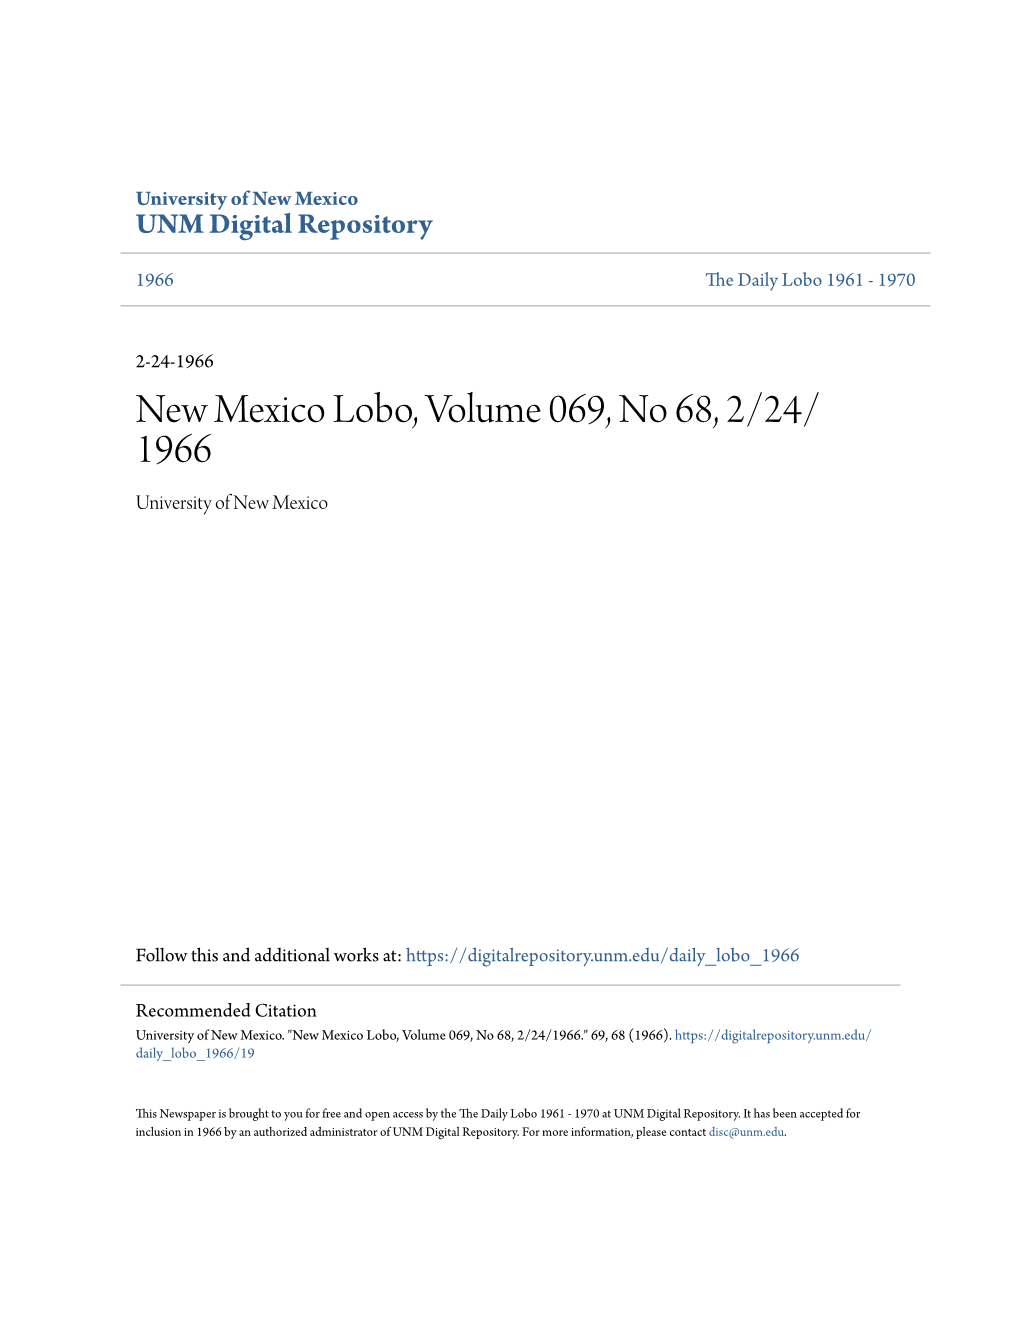 New Mexico Lobo, Volume 069, No 68, 2/24/1966." 69, 68 (1966)